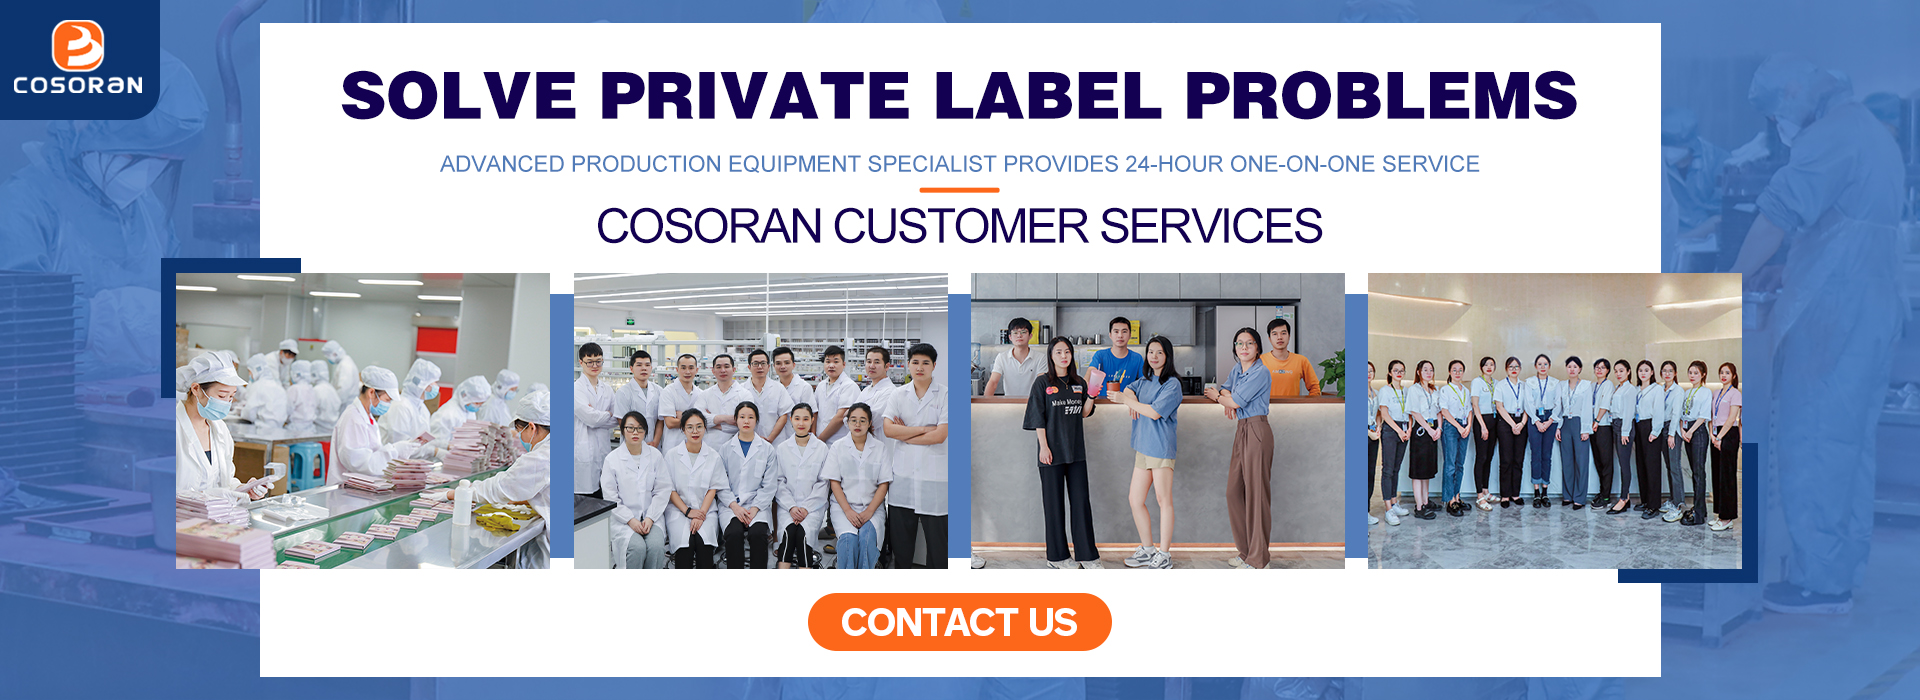 Cosoran Customer Services Team